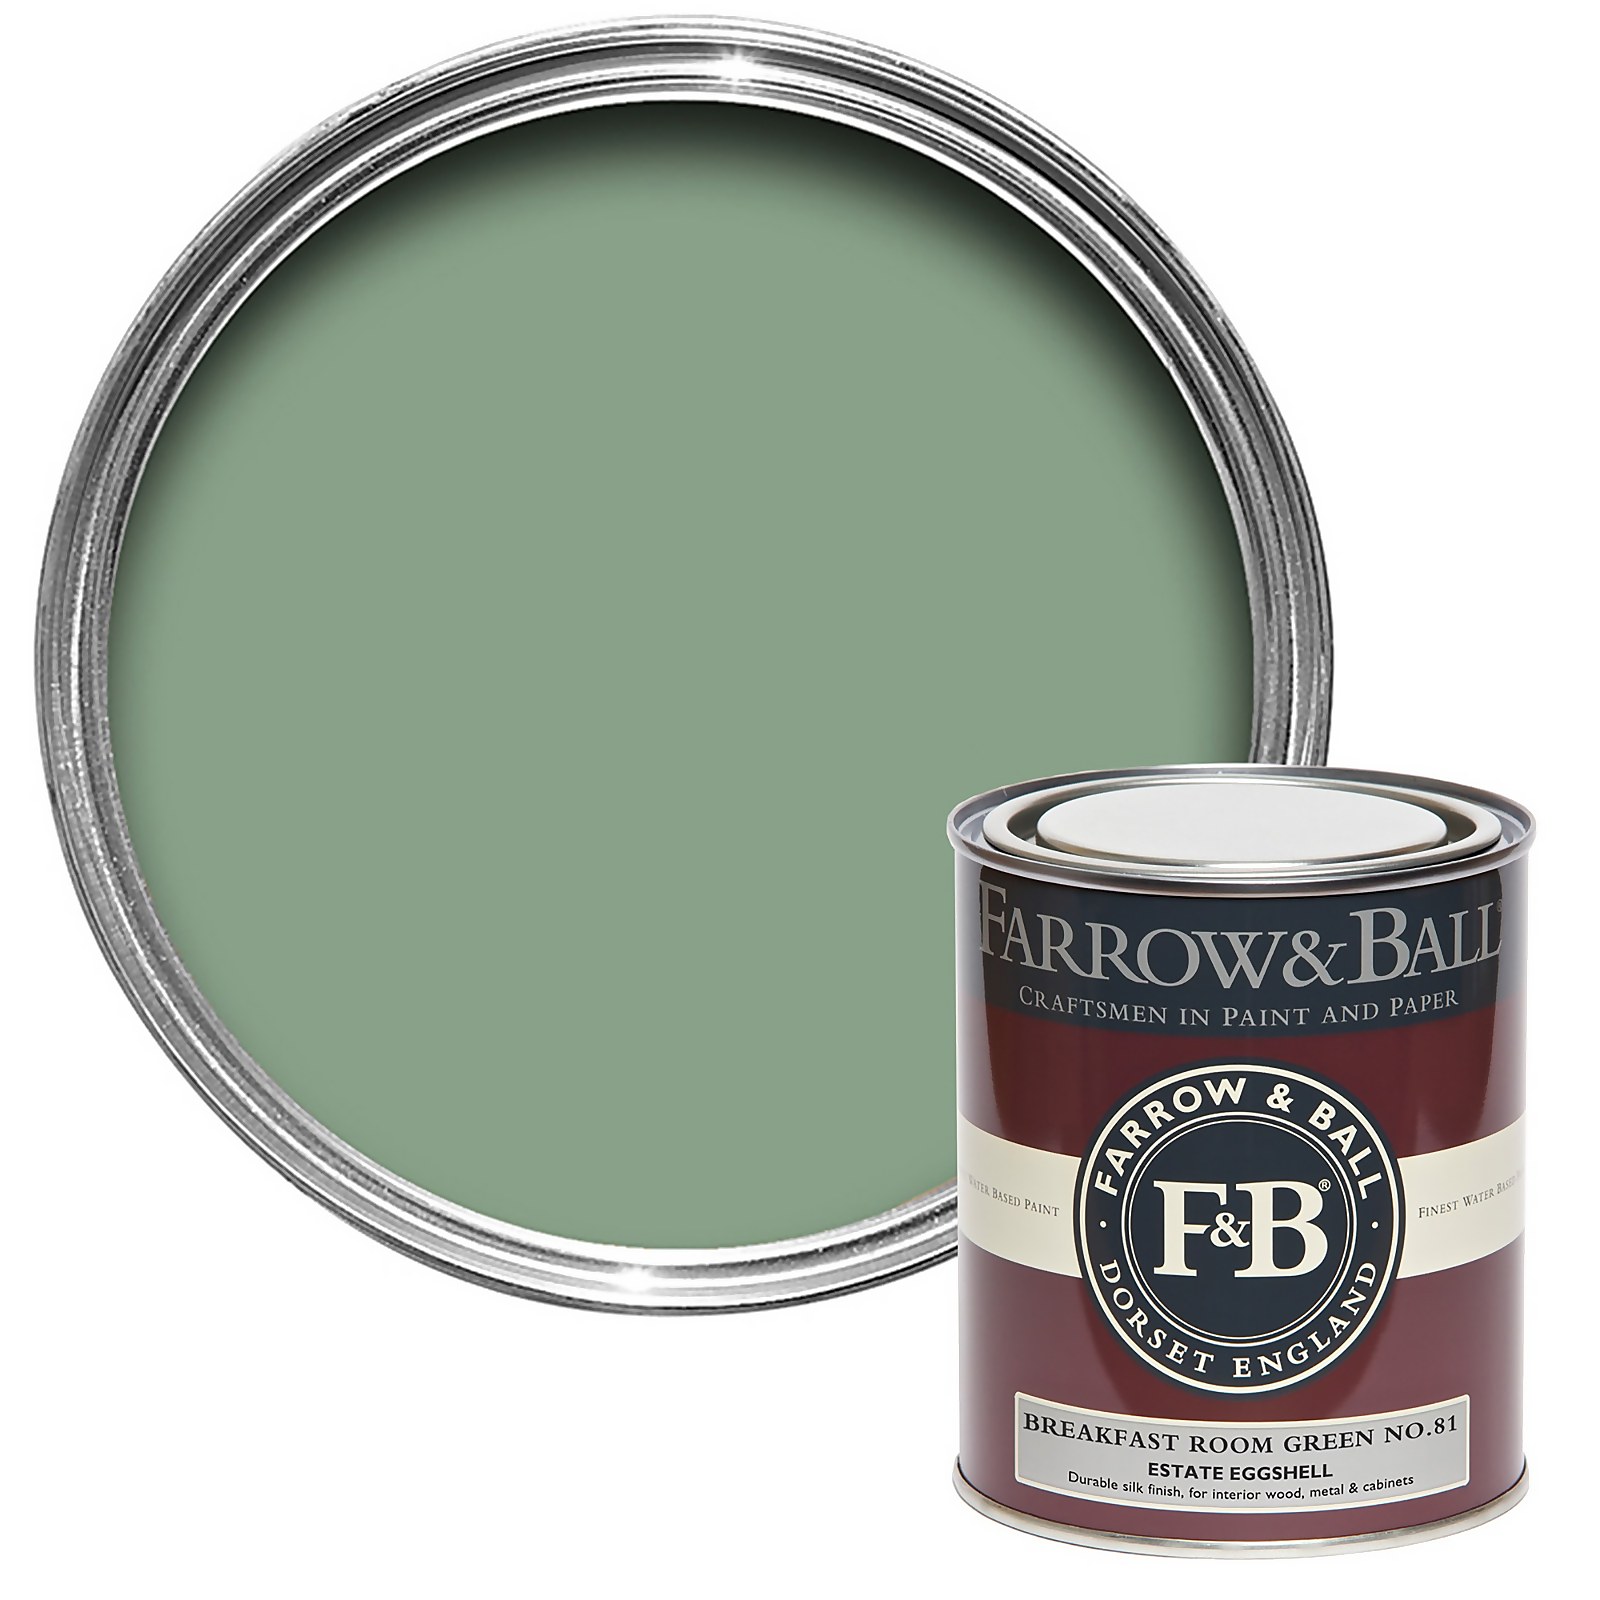 Farrow & Ball Estate Eggshell Paint Breakfast Room Green No.81 - 750ml